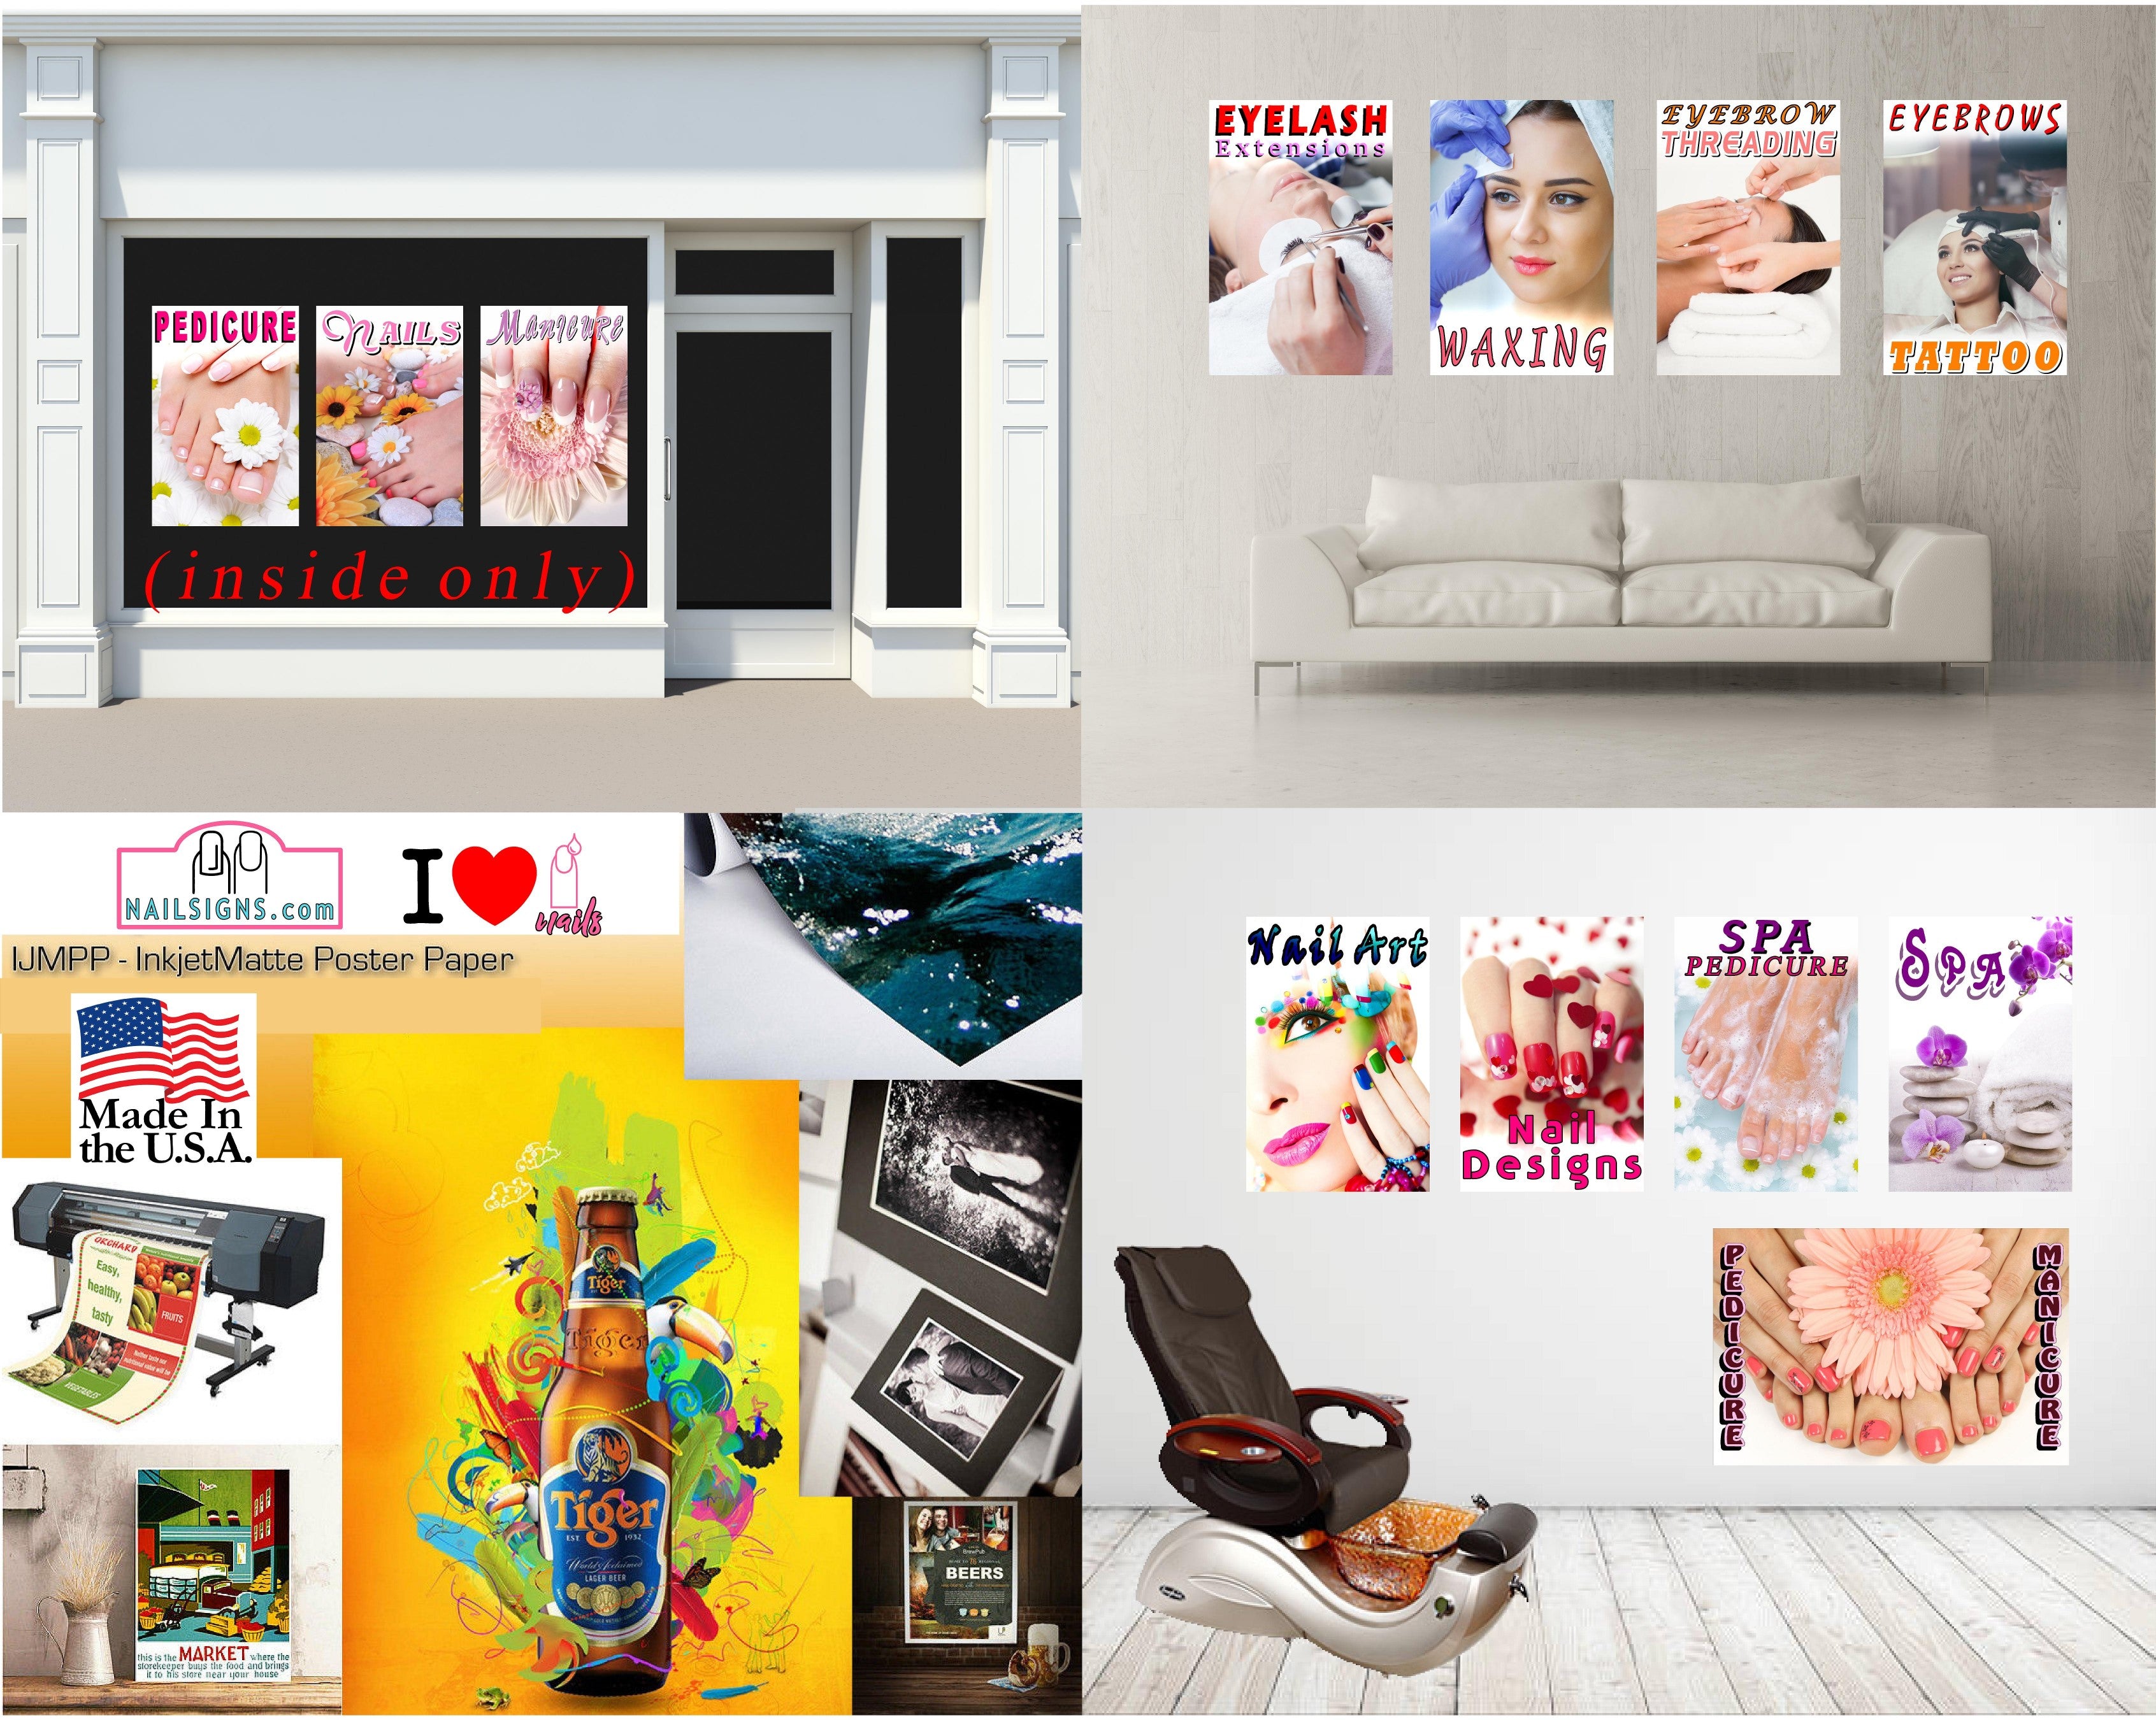 Pedicure 12 Photo-Realistic Paper Poster Premium Matte Interior Inside Sign Advertising Marketing Wall Window Non-Laminated Vertical